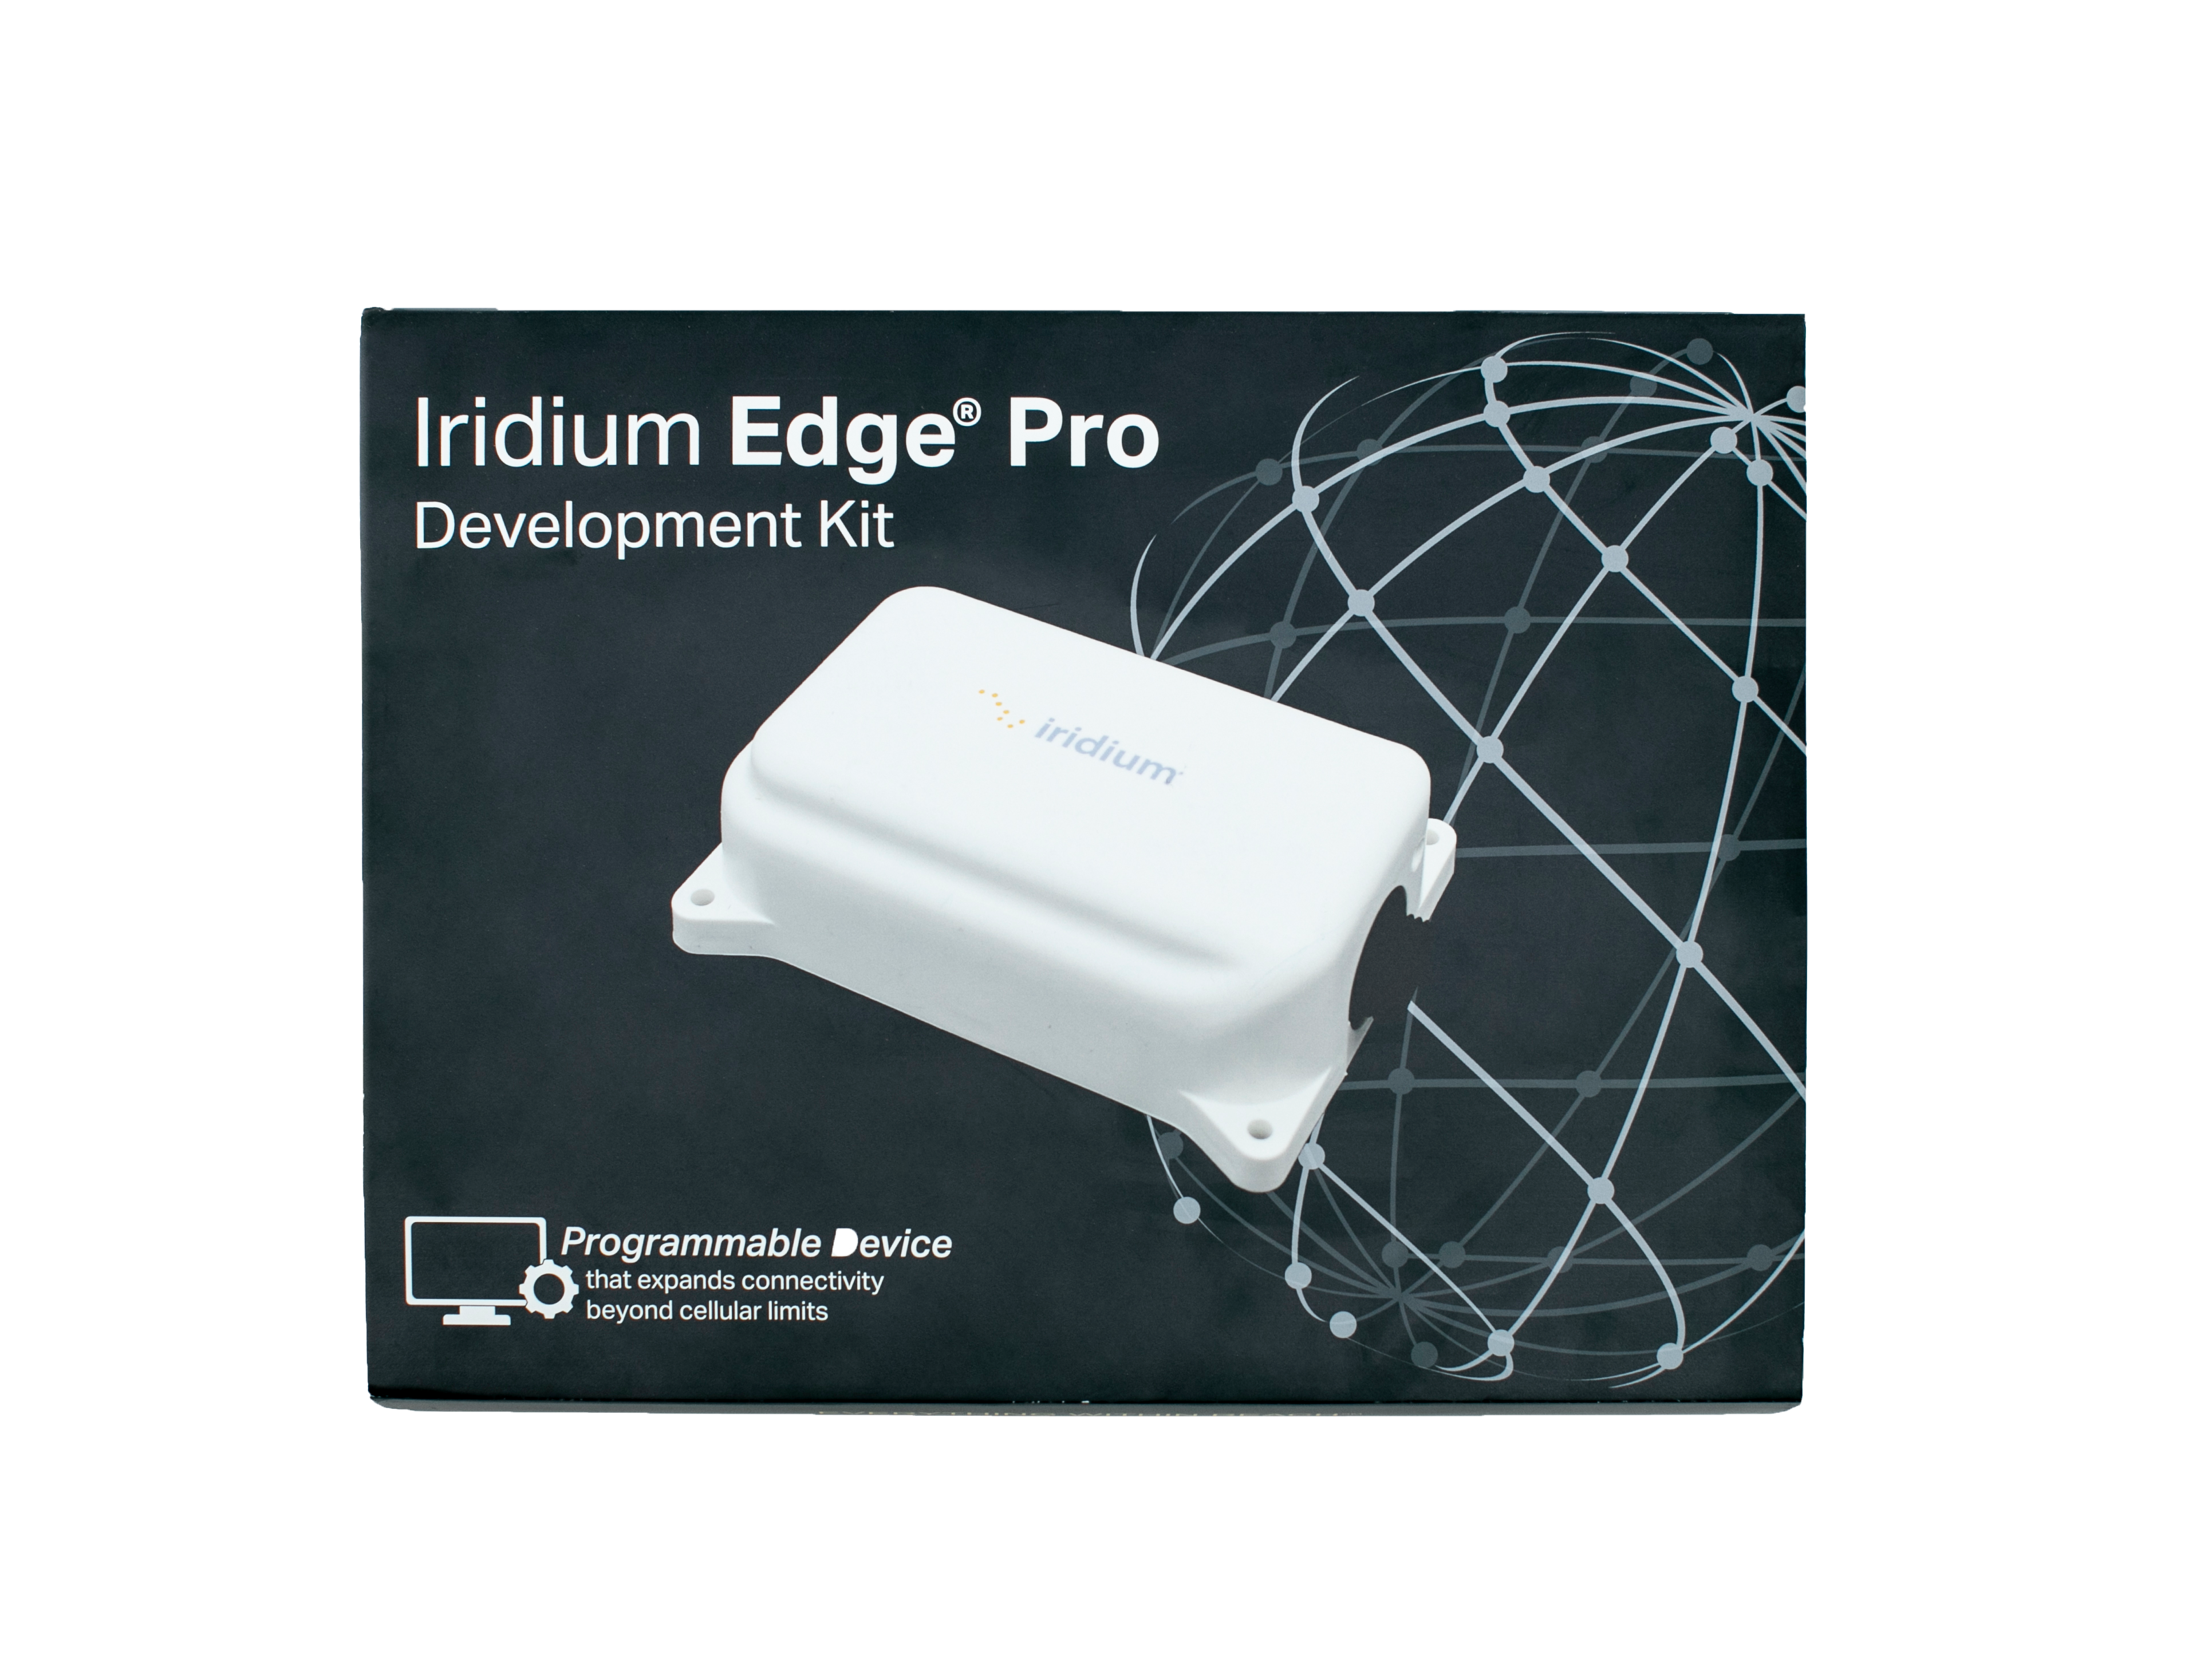 Iridium Edge Pro Demo Kit Image